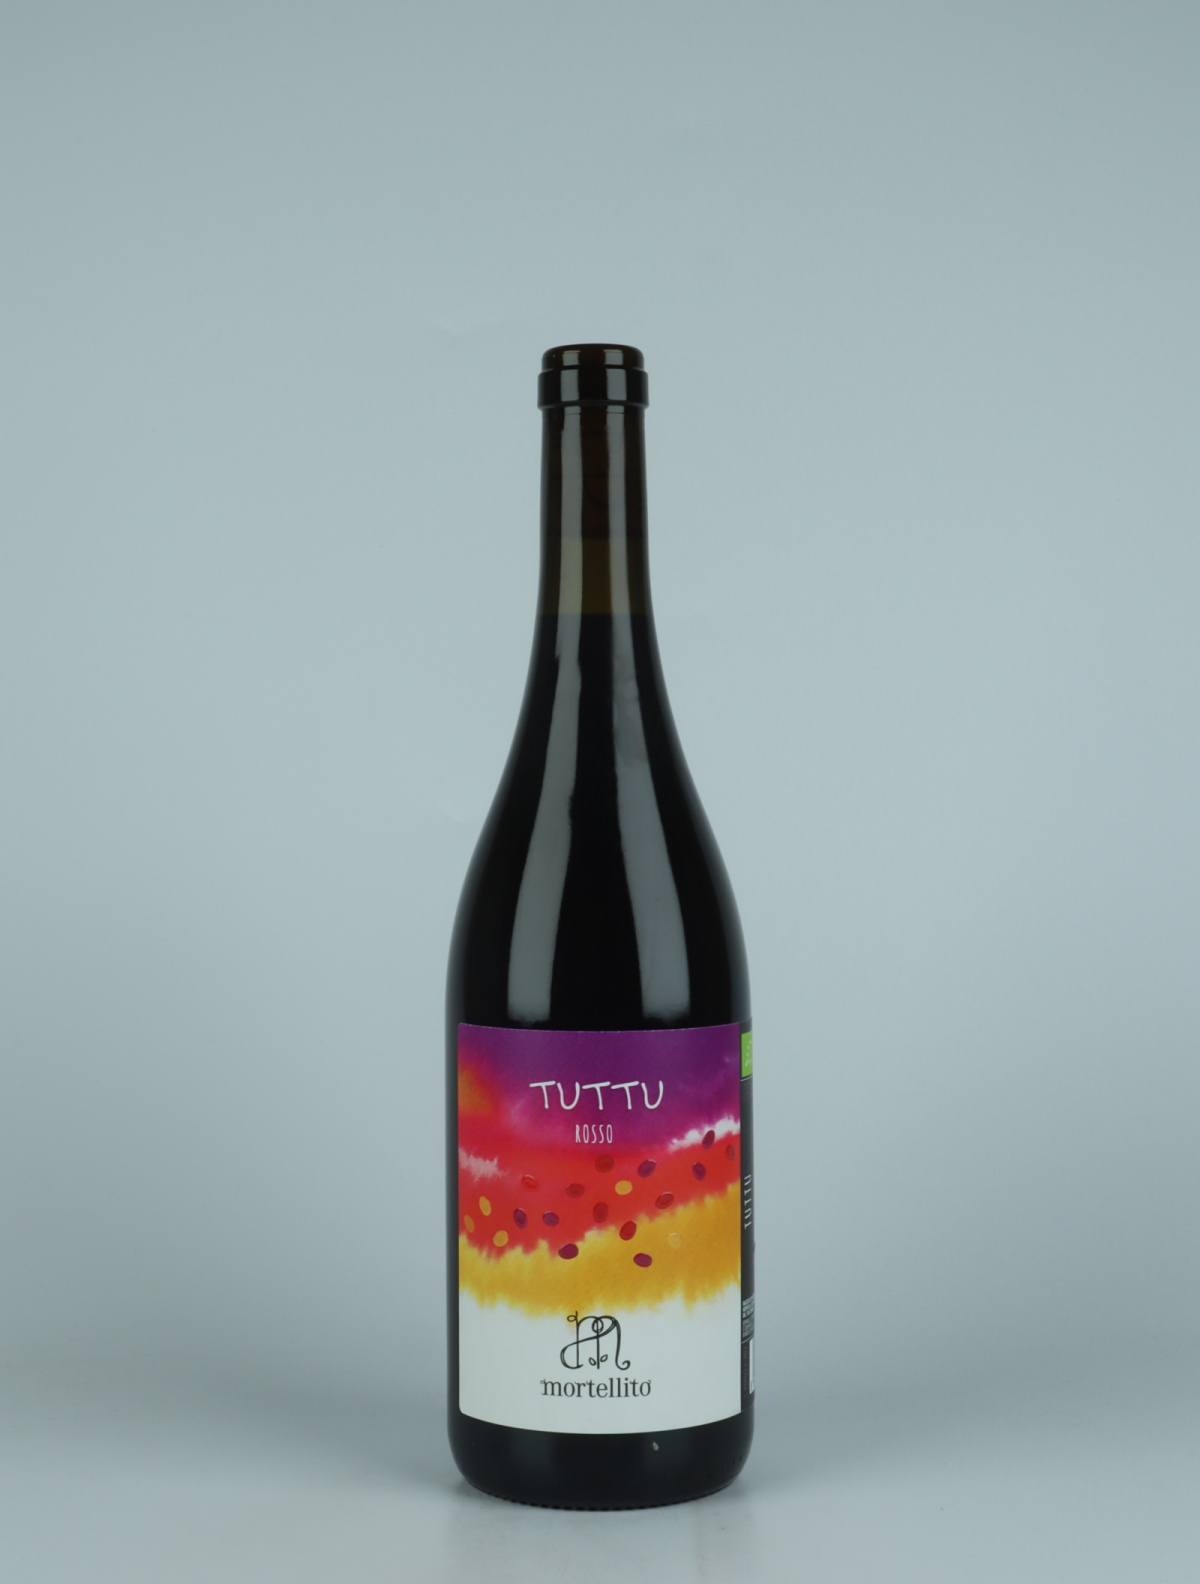 A bottle 2022 Tuttu Red wine from Il Mortellito, Sicily in Italy